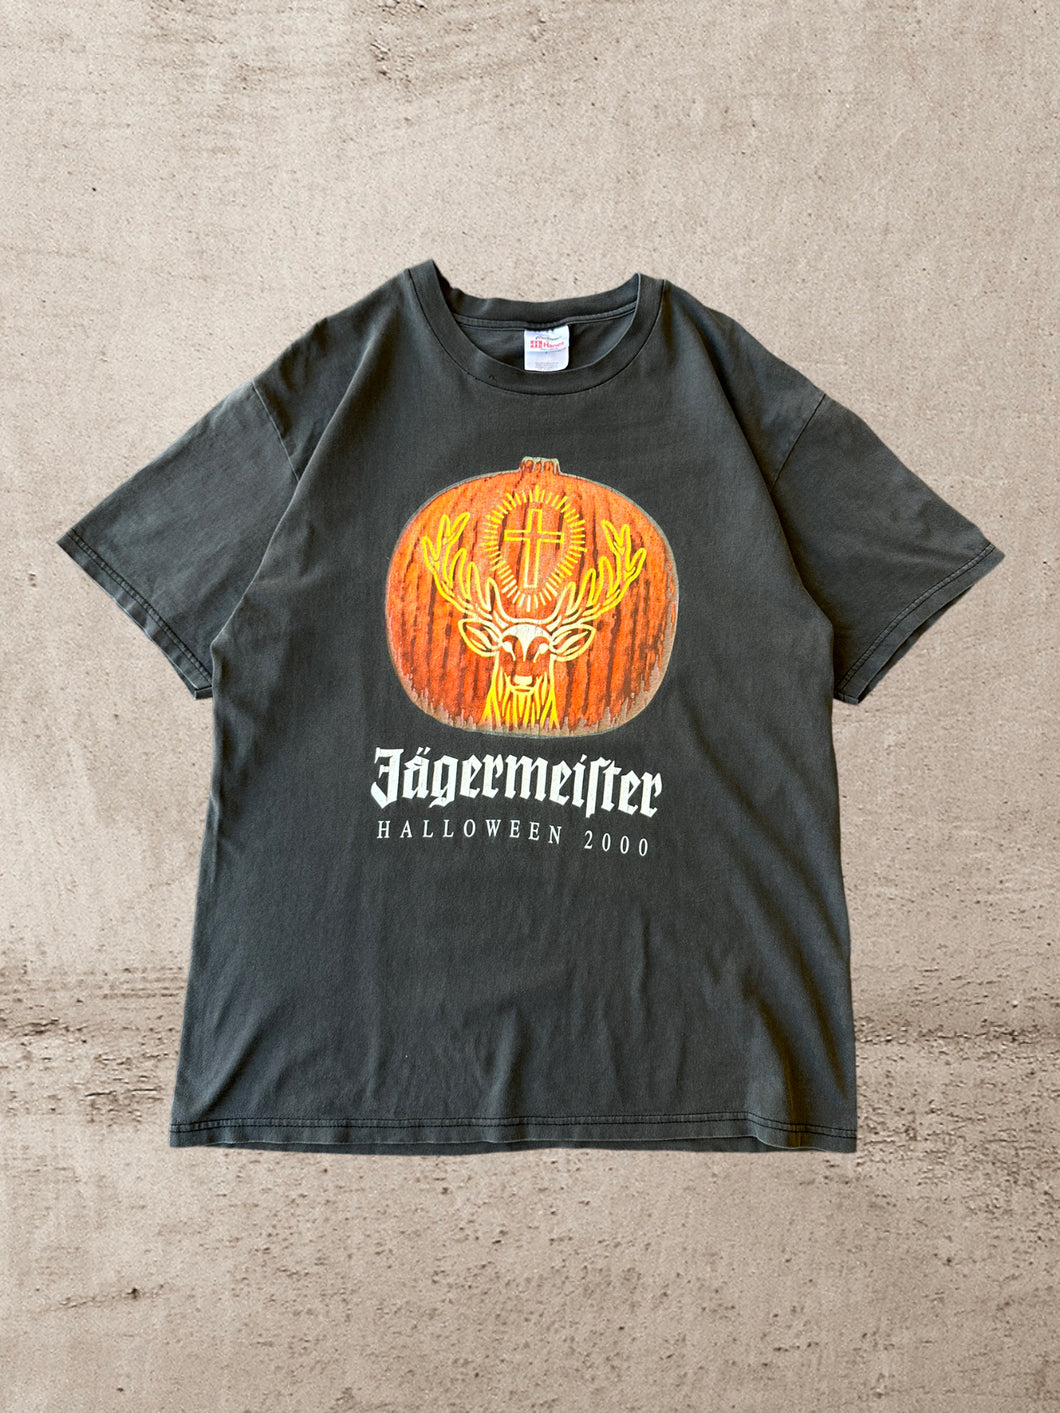 2000 Jäegermeister Halloween T-Shirt - Large